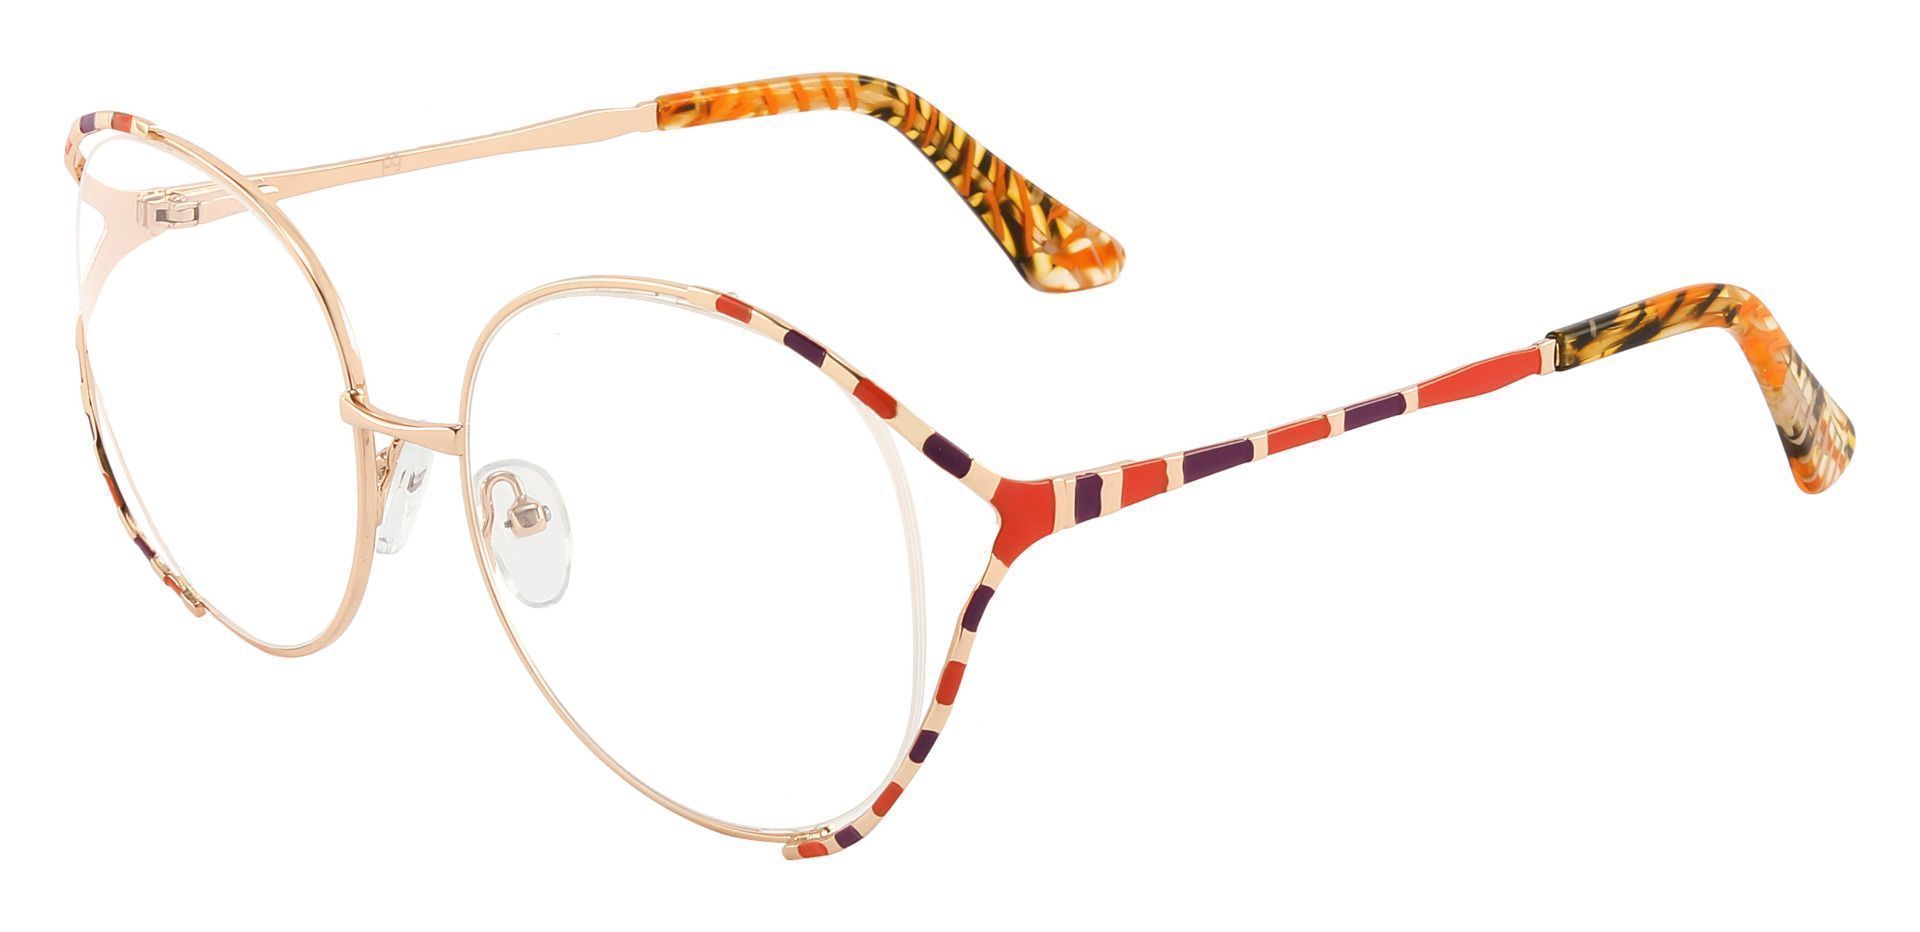 Dorothy Oval Eyeglasses Frame - Brown